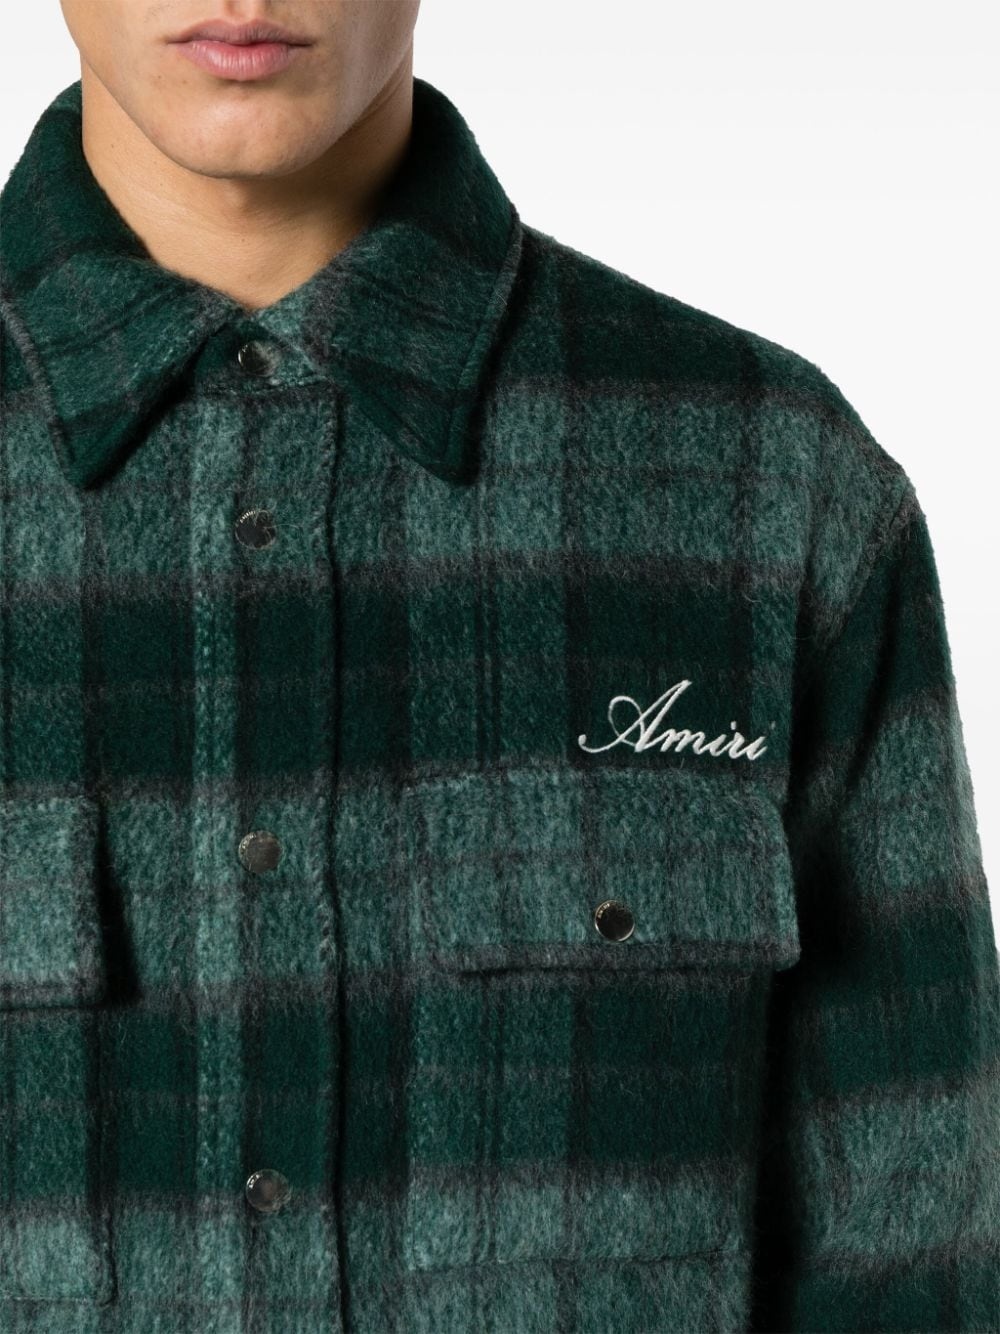 embroidered-logo plaid-patterned shirt jacket - 5